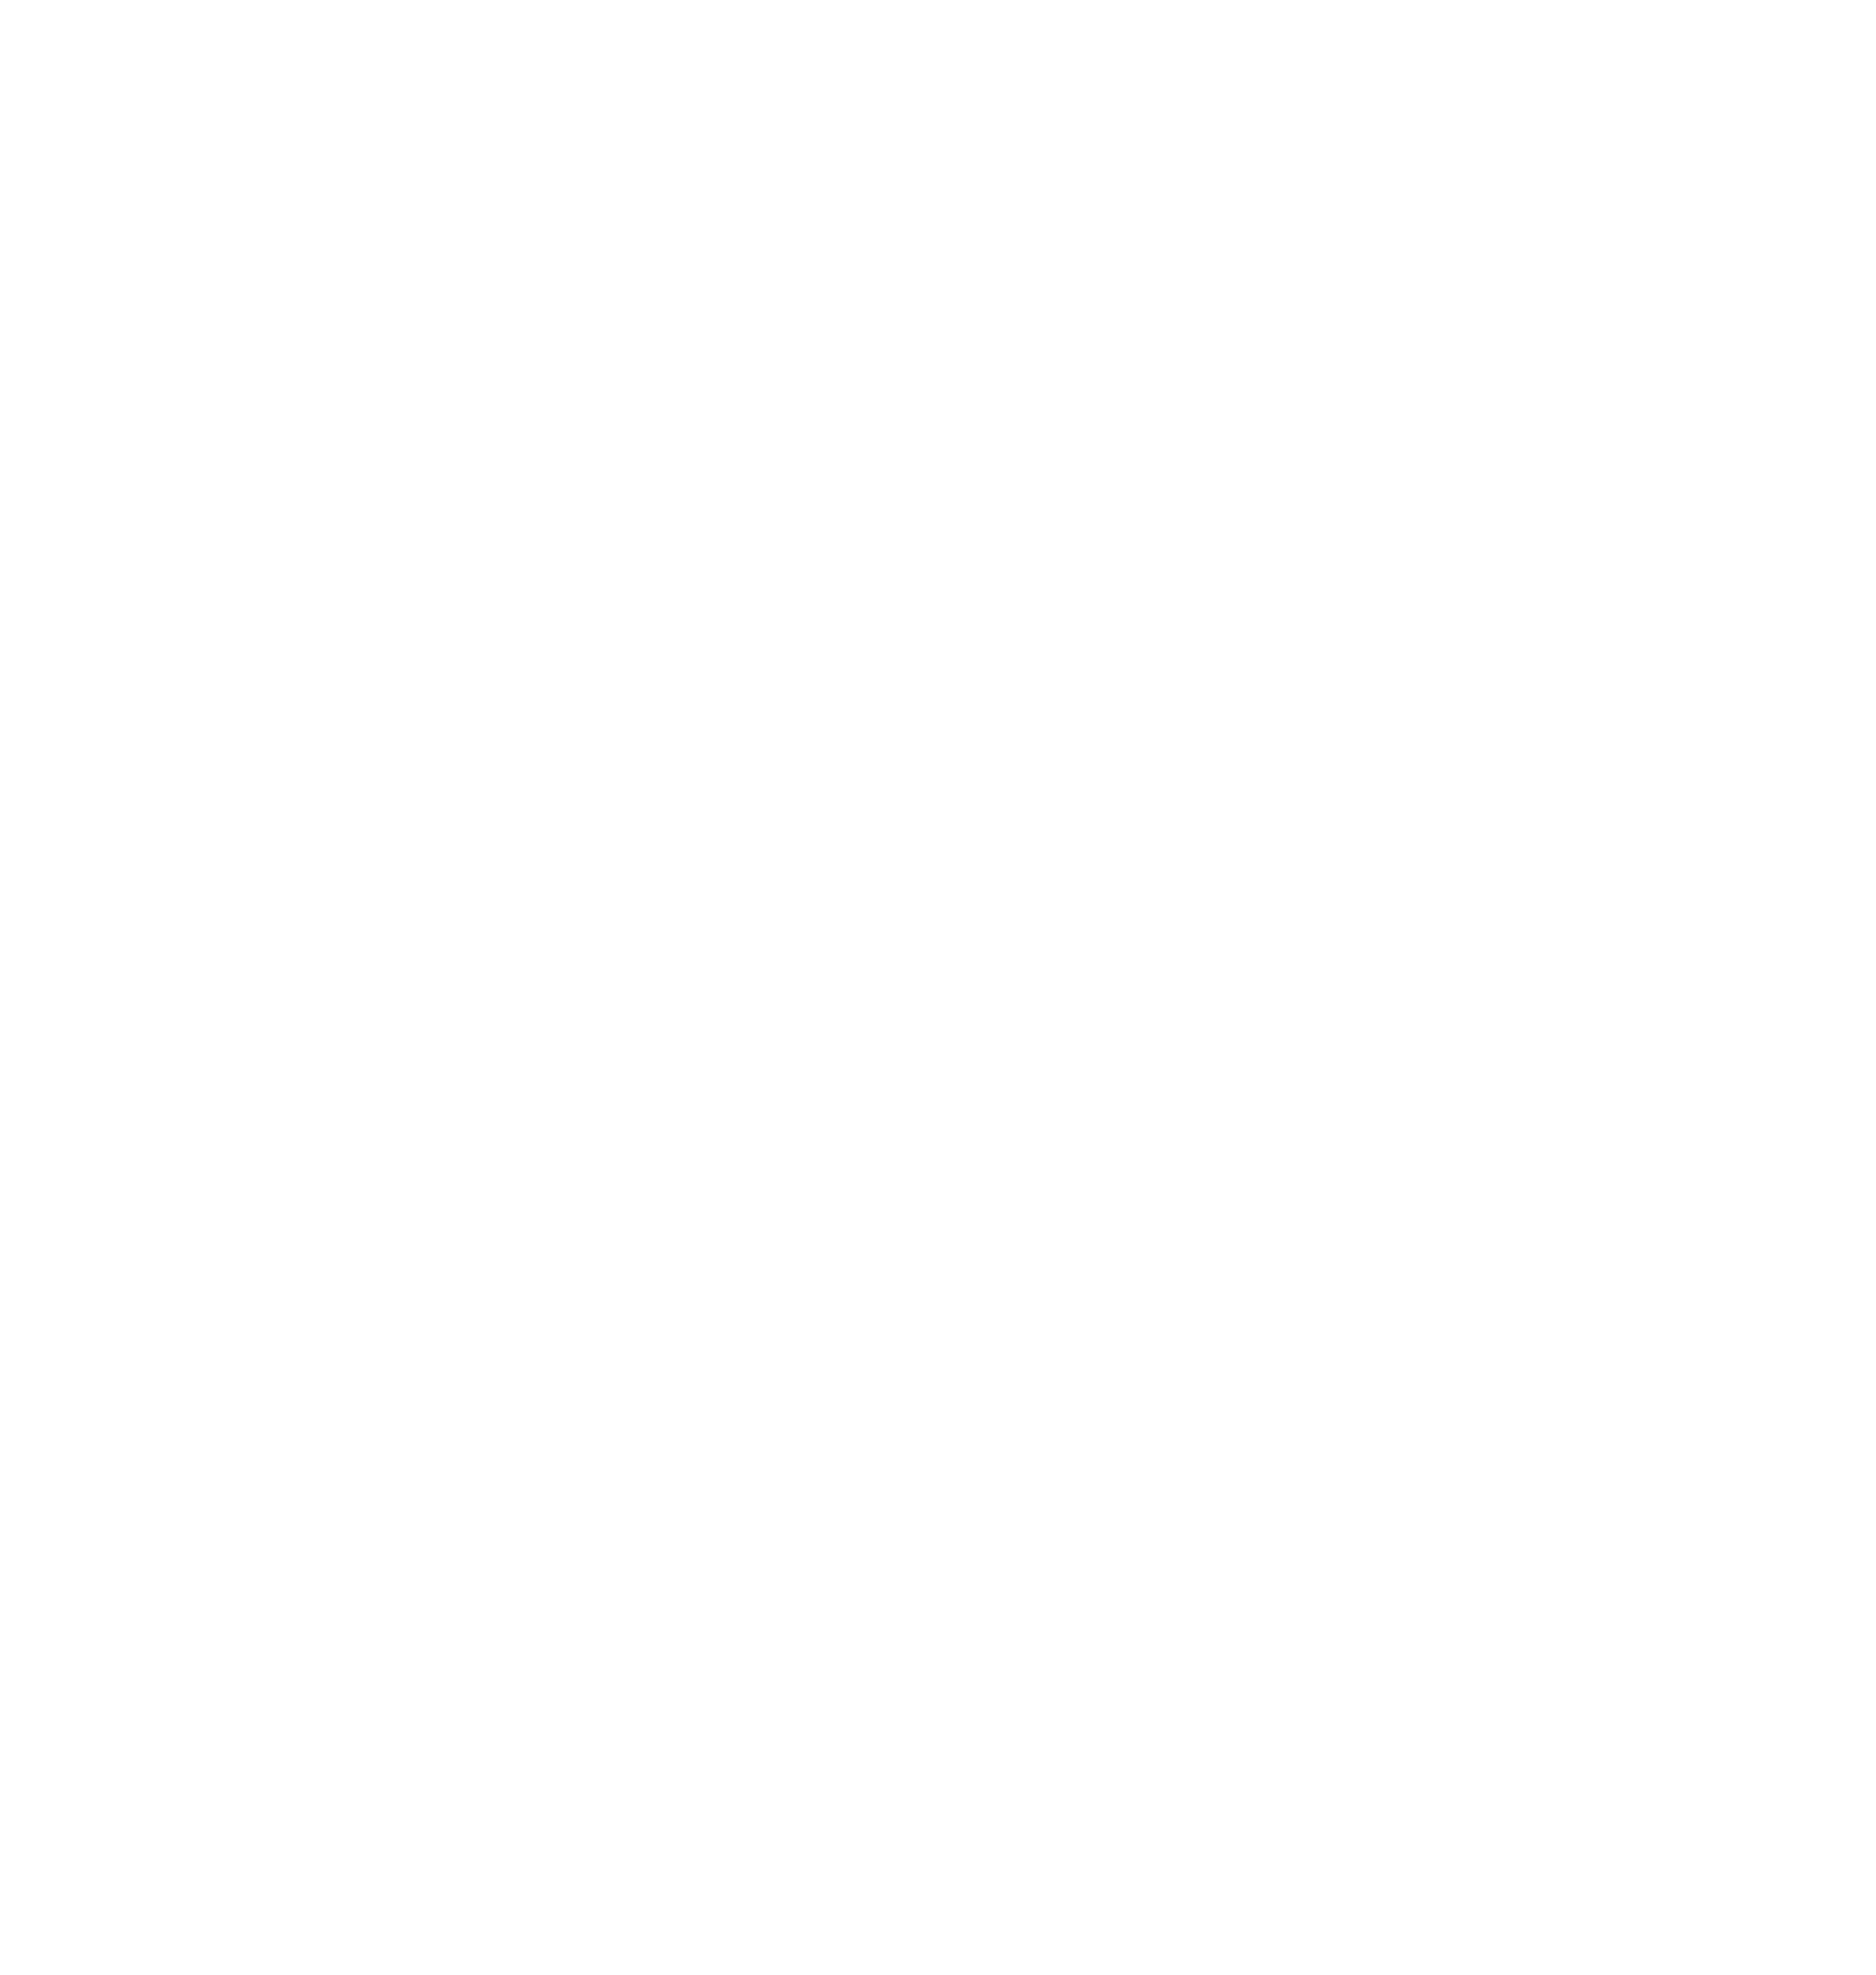 Ten-wheels